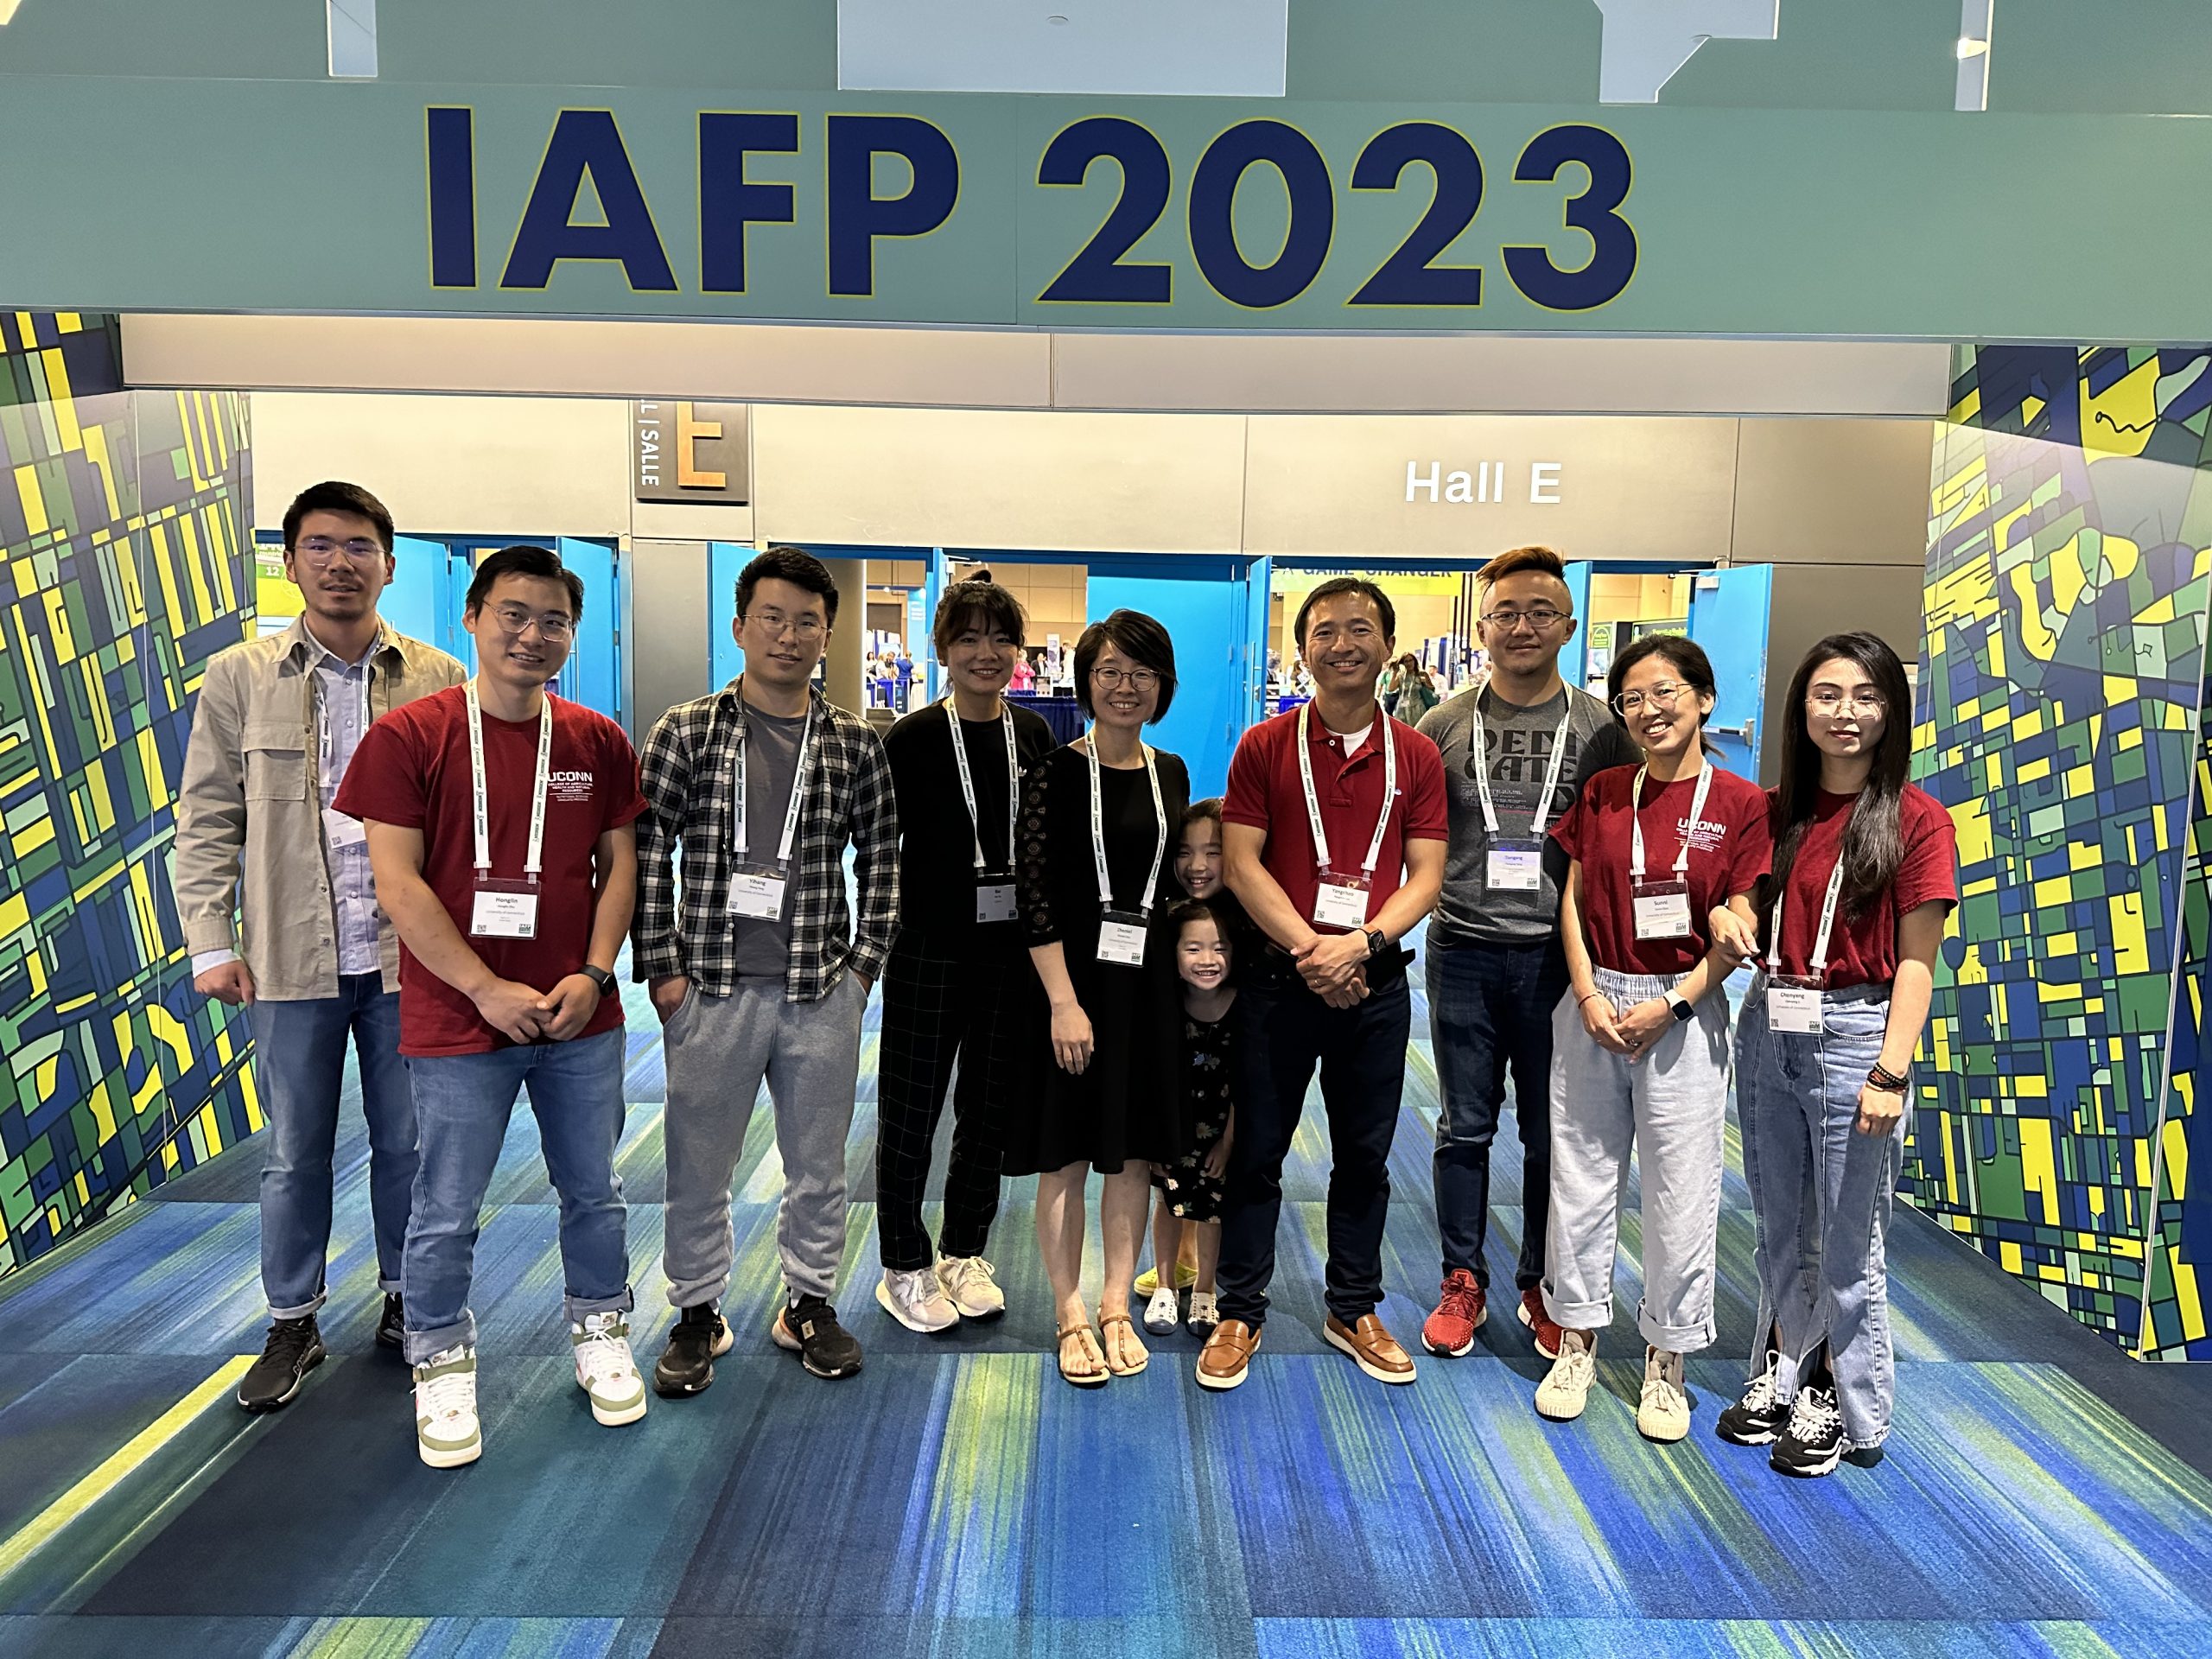 IAFP group photo